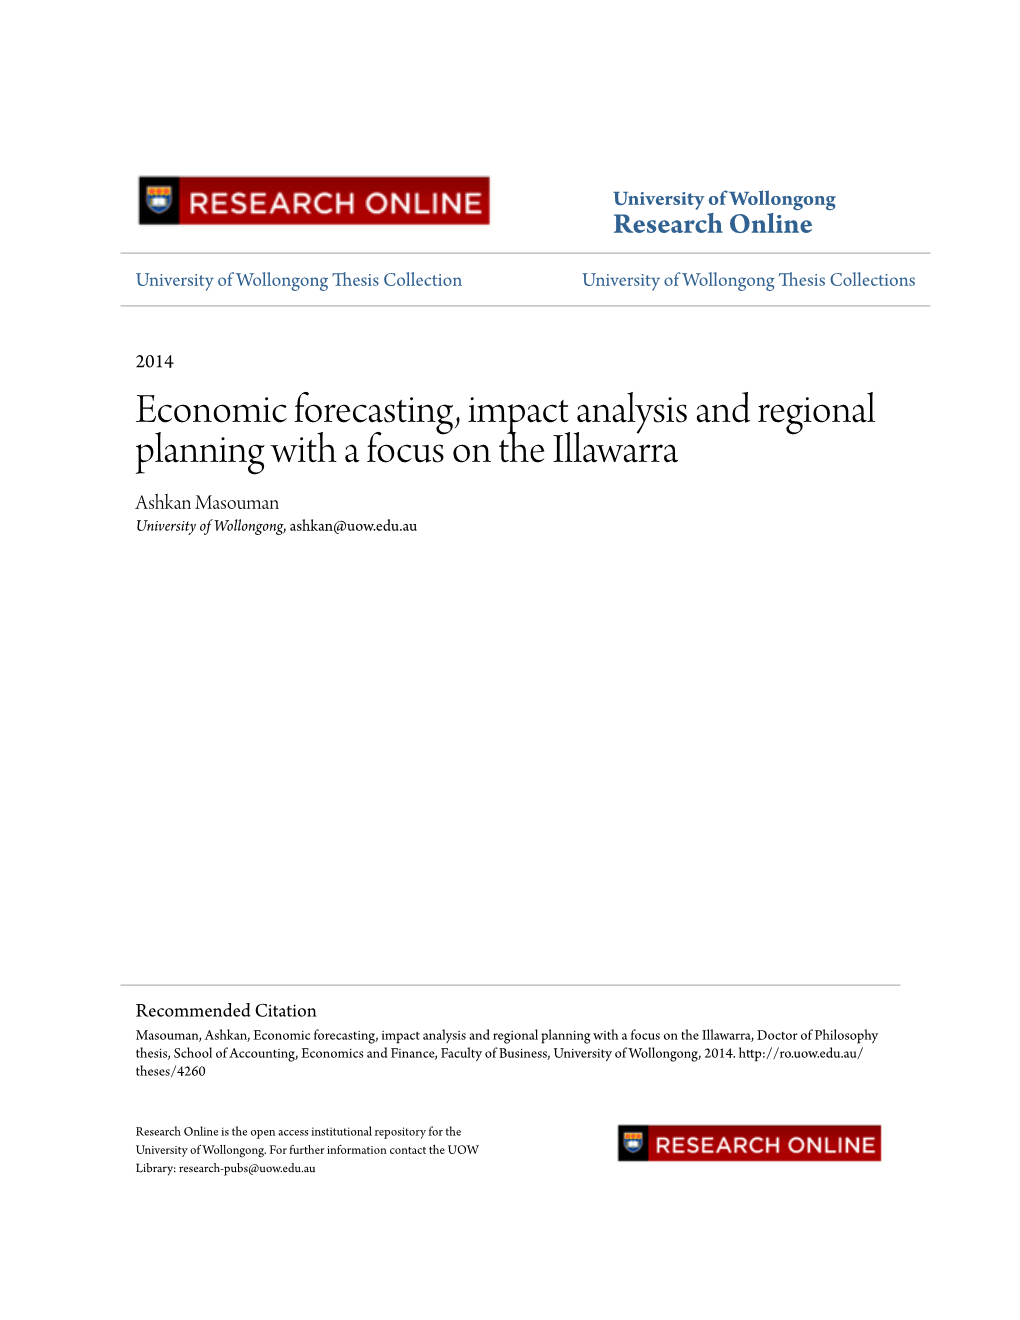 Economic Forecasting, Impact Analysis and Regional Planning with a Focus on the Illawarra Ashkan Masouman University of Wollongong, Ashkan@Uow.Edu.Au